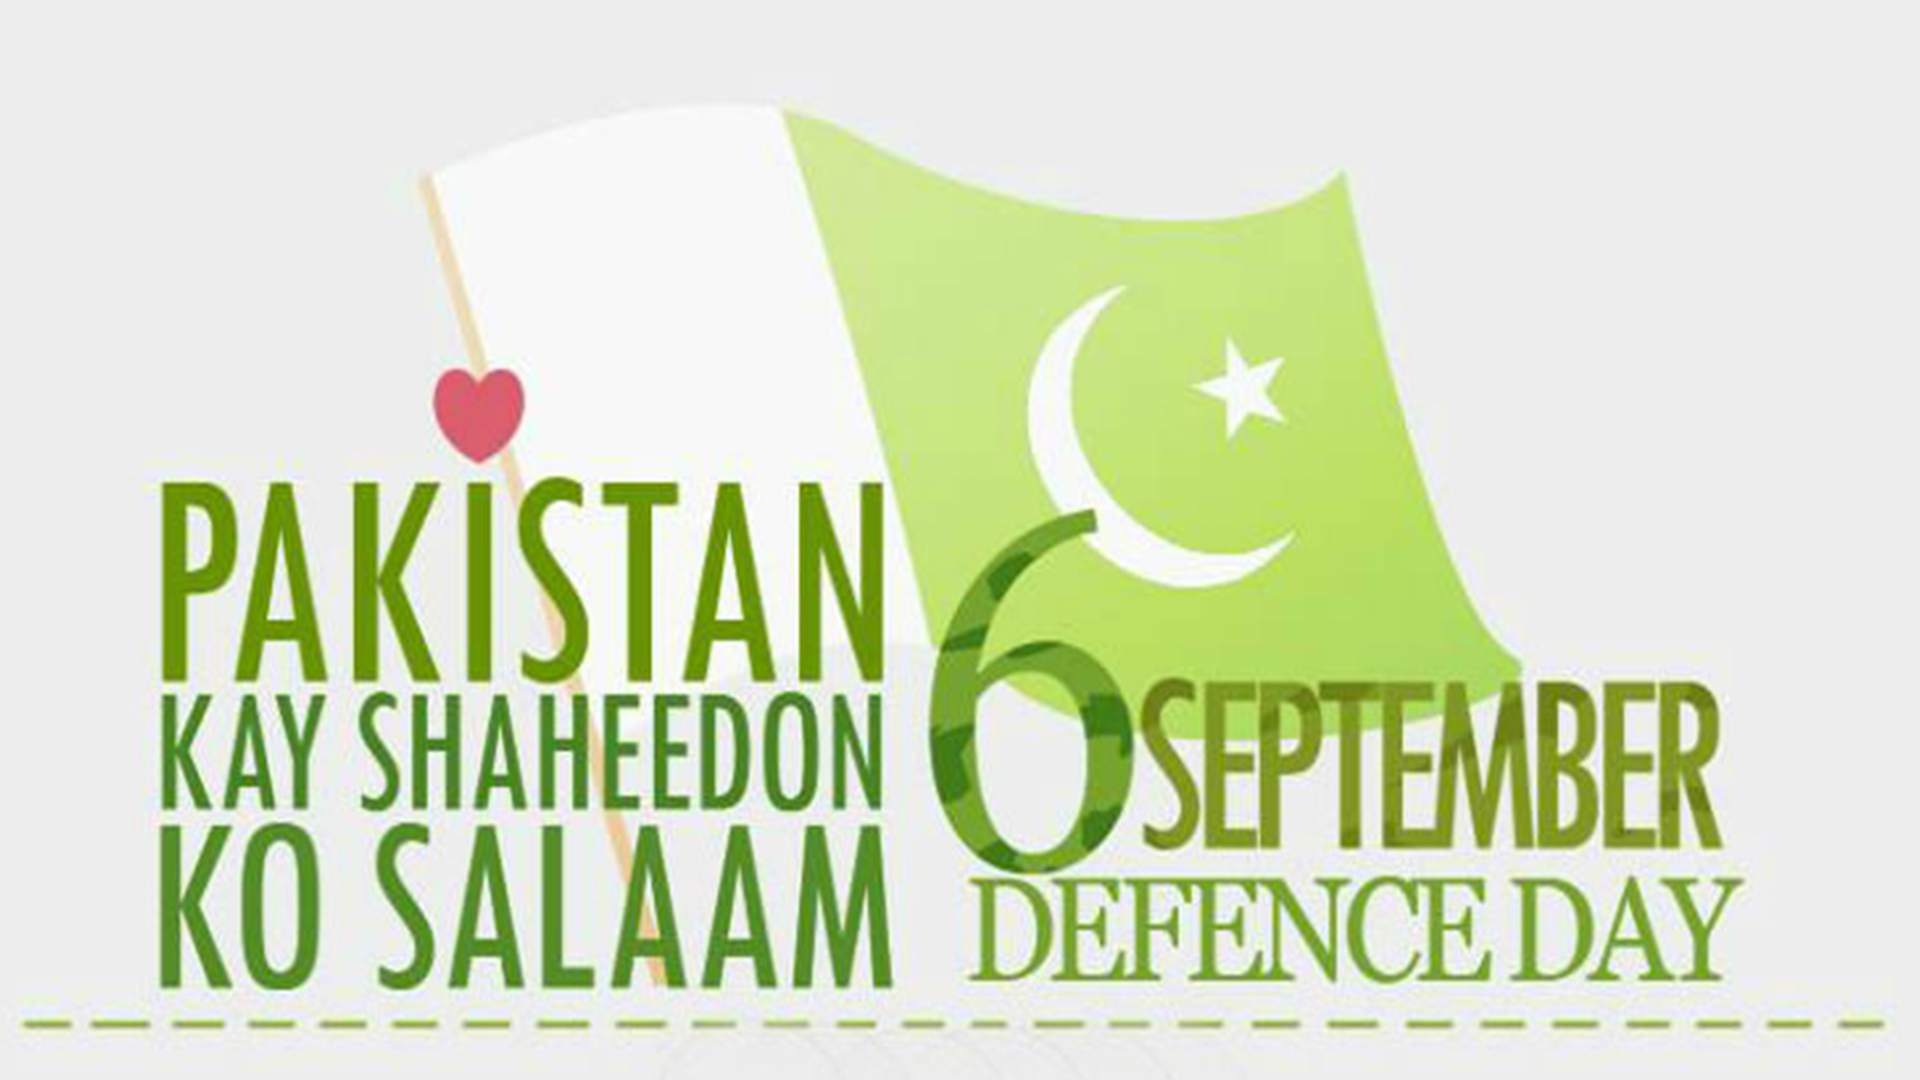 defence day pakistan 2018 image hd